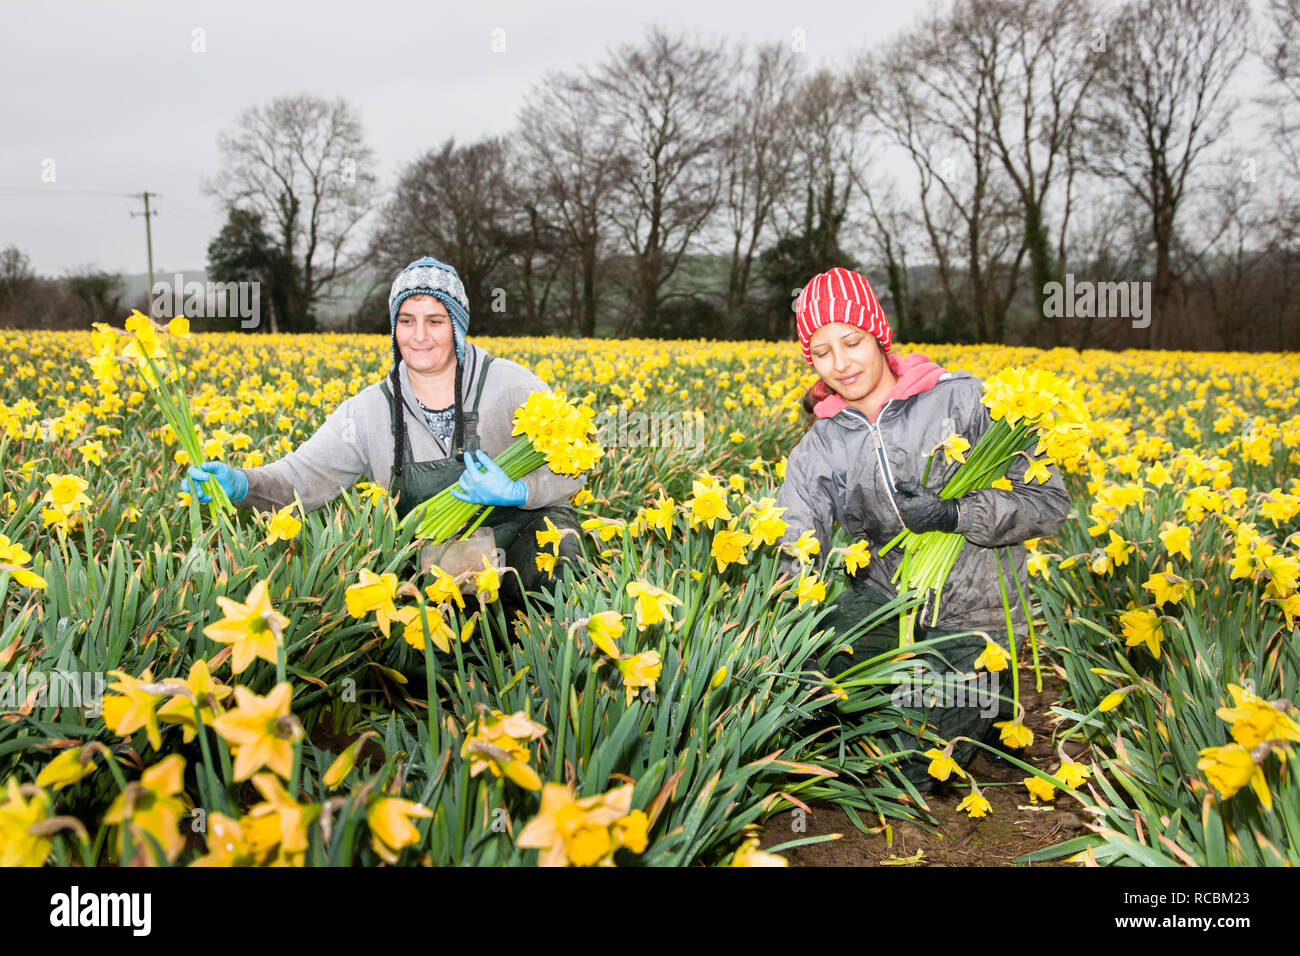 Bandon, Cork, Ireland. 15th January, 2019. Ileana Bledea and Maria Groza picking Daffodils at the West Cork Daffodil farm outside Bandon, Co. Cork. Stock Photo